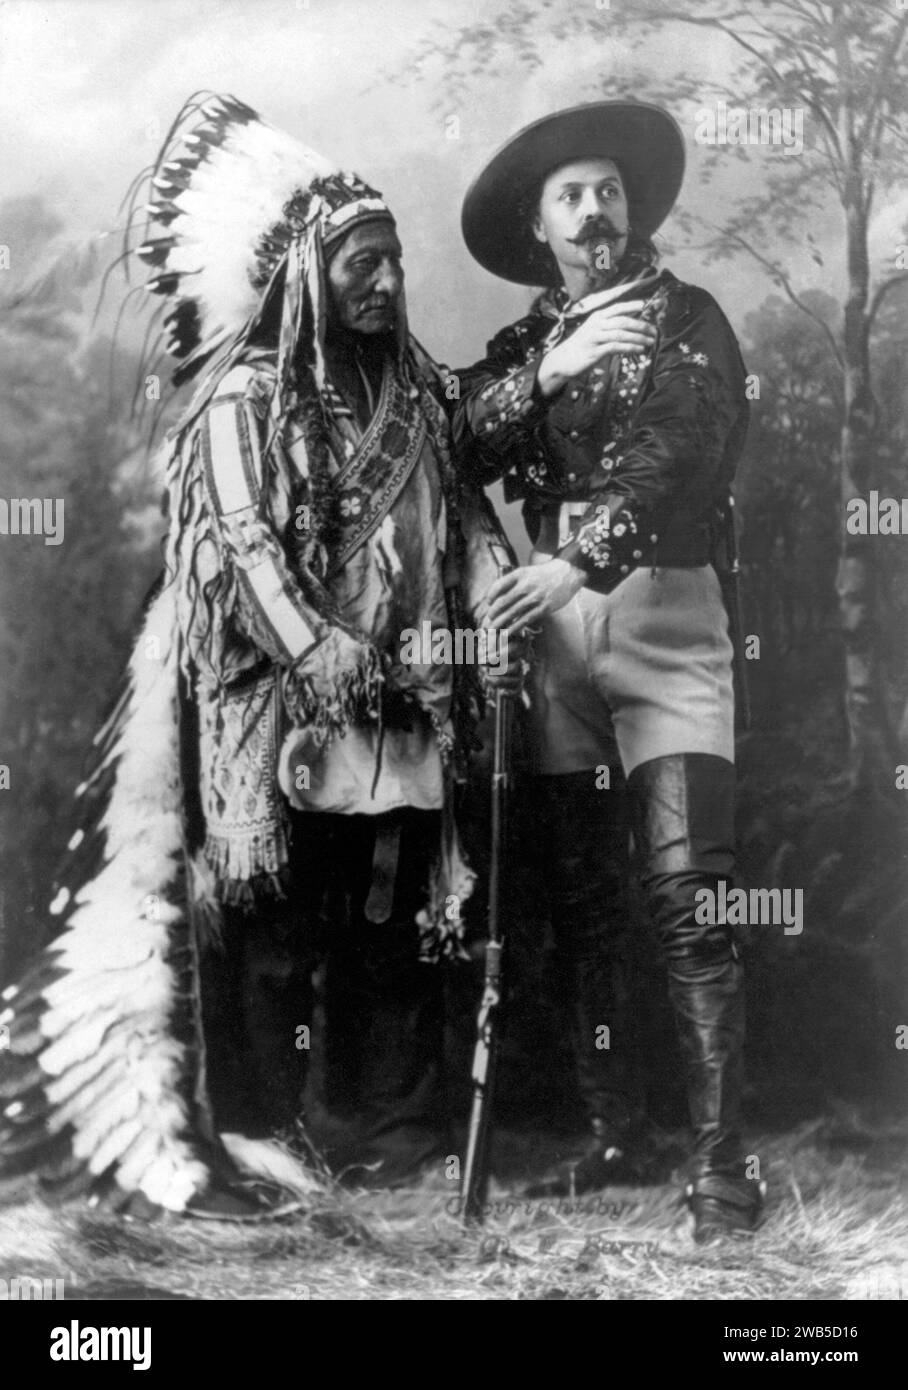 Sitting Bull and Buffalo Bill, Buffalo Bill, William Cody, William Frederick Cody (1846 – 1917), known as Buffalo Bill, American soldier, bison hunter, and showman. Stock Photo